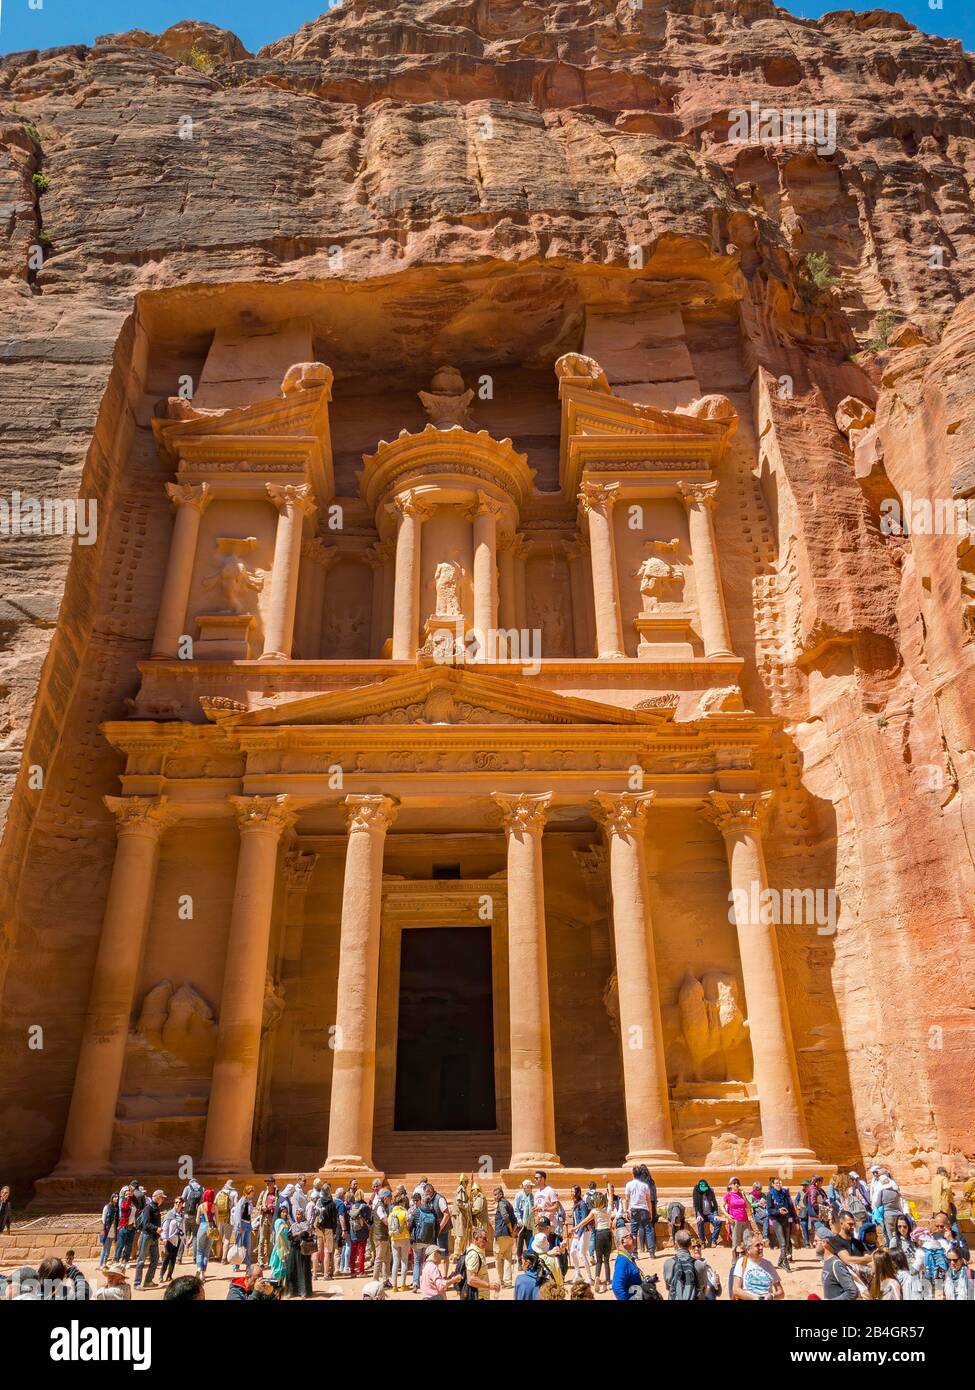 Jordan, Al-Khazneh, the treasure house in the rock city Petra Stock Photo